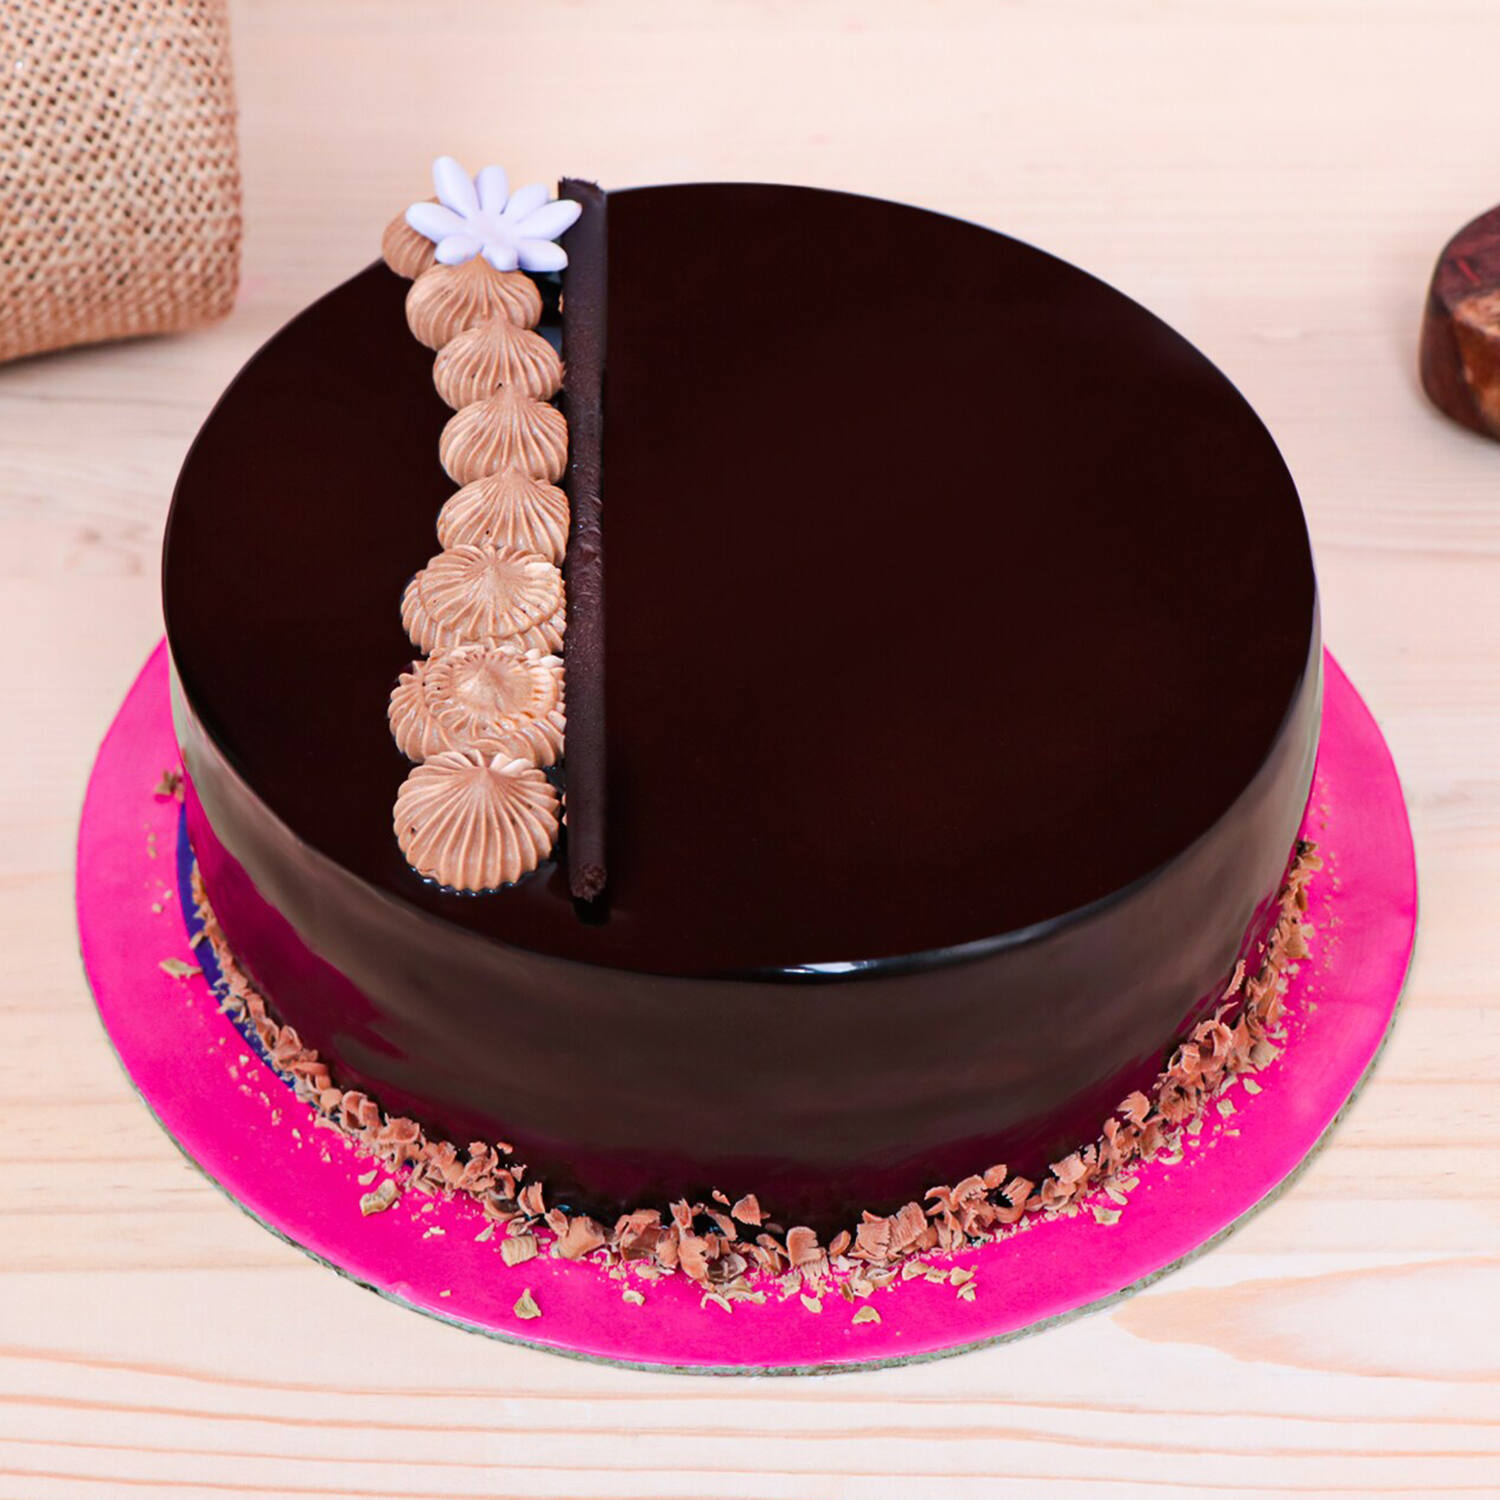 Oreo Chocolate Drip Cake - Most Popular Cake in 2020!